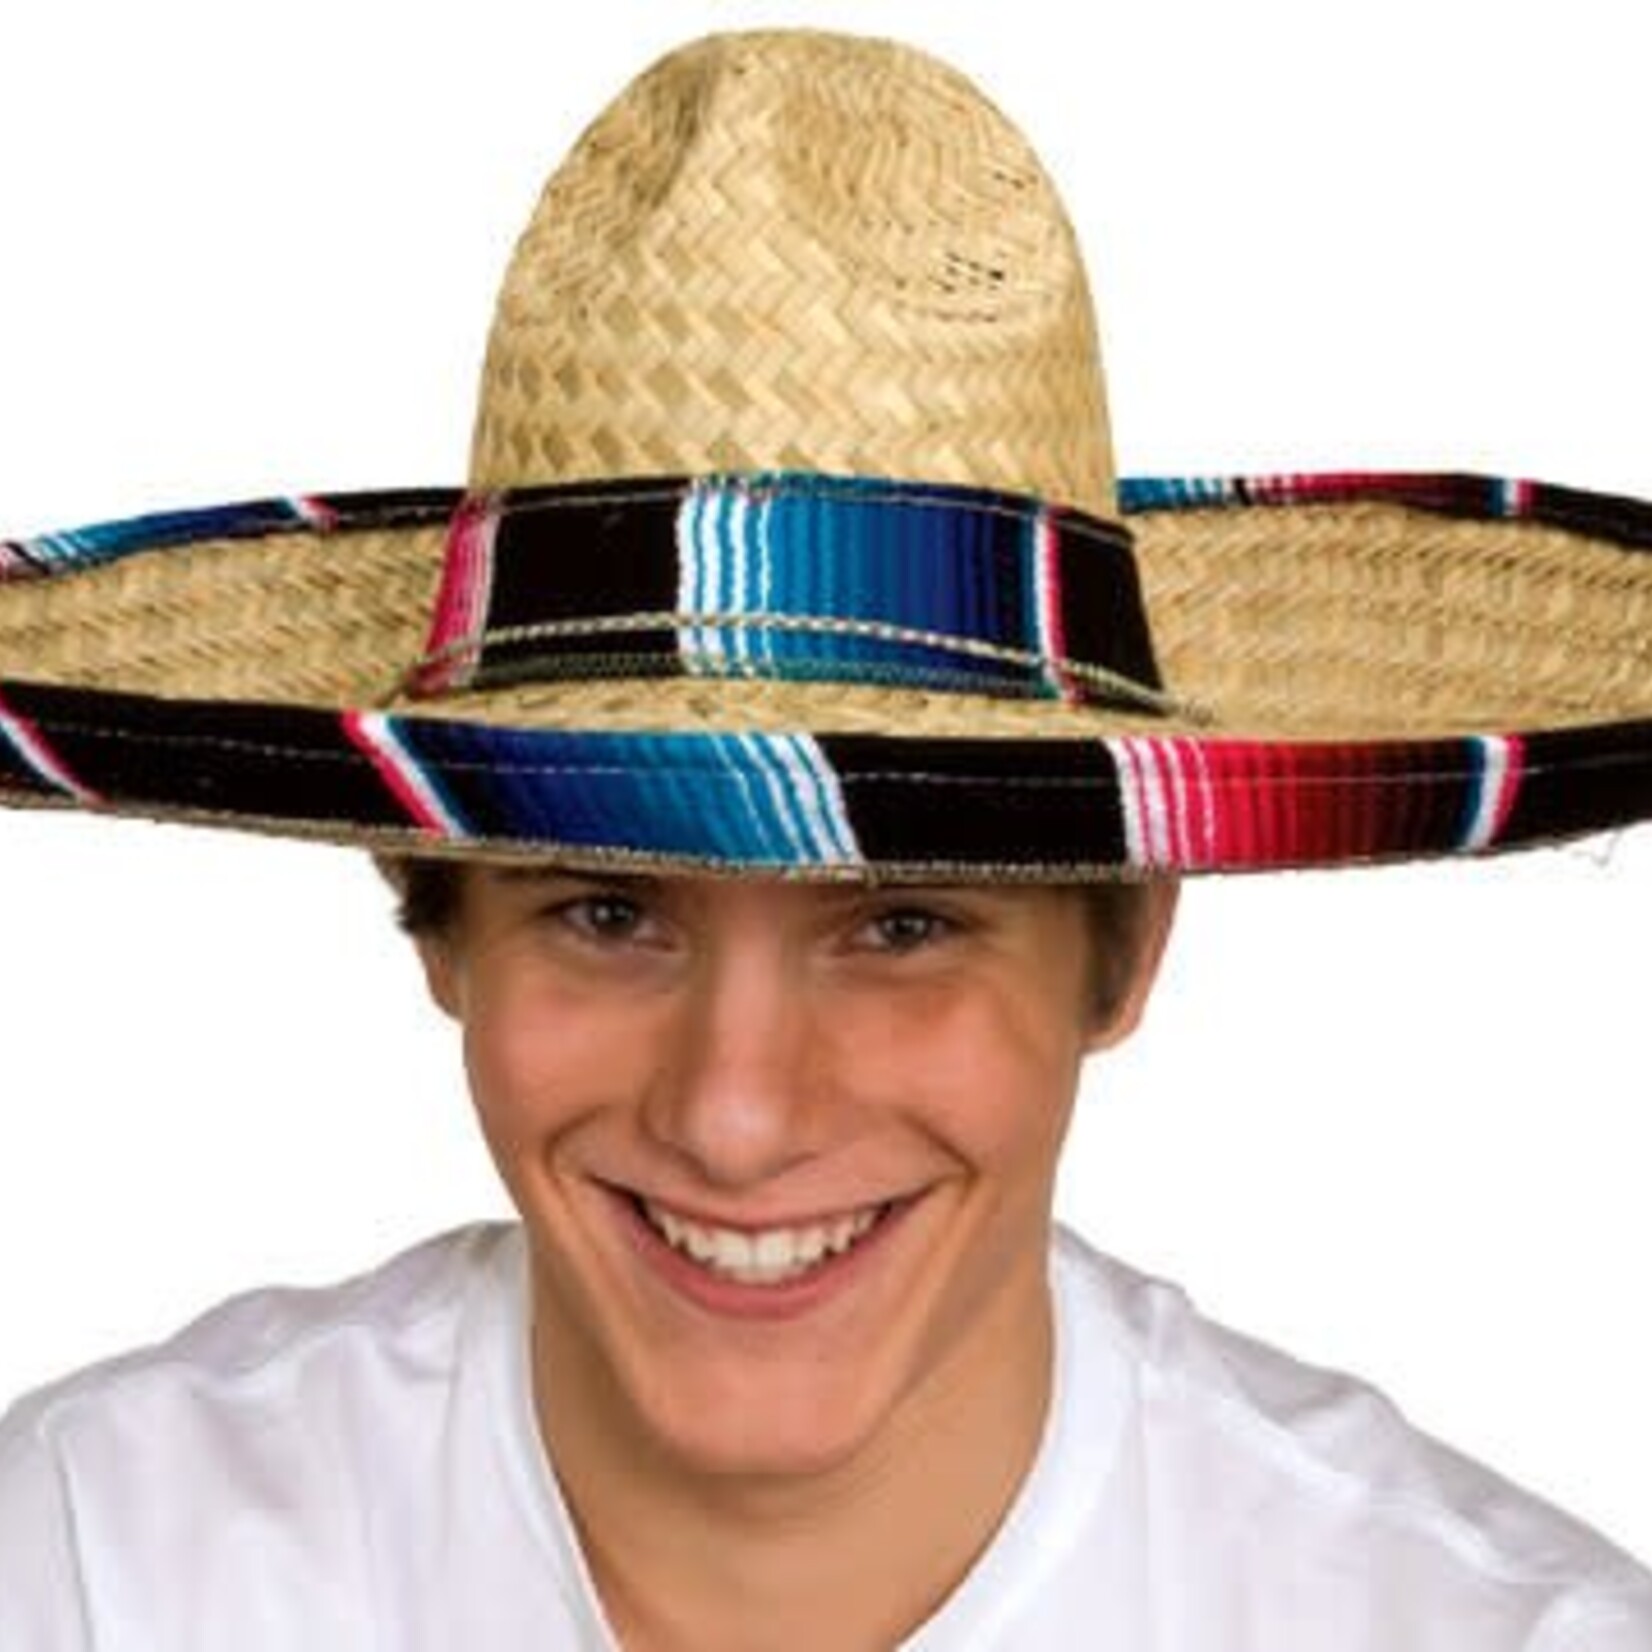 Sombrero Mexican Hat Adult